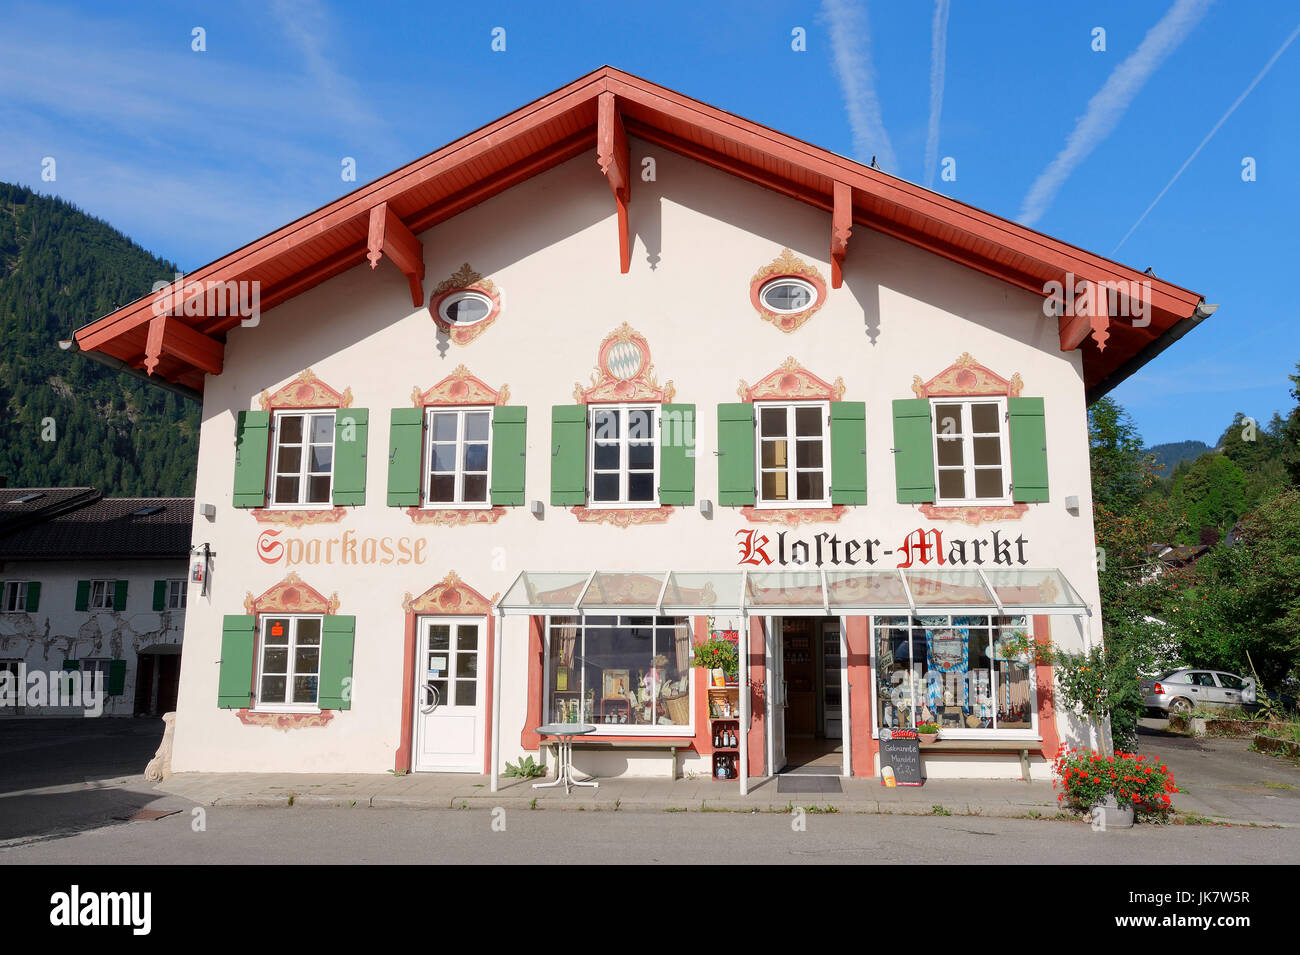 Shop 'Kloster-Markt', Ettal, Bavaria, Germany / monastery market | Geschaeft 'Kloster-Markt', Ettal, Bayern, Deutschland Stock Photo